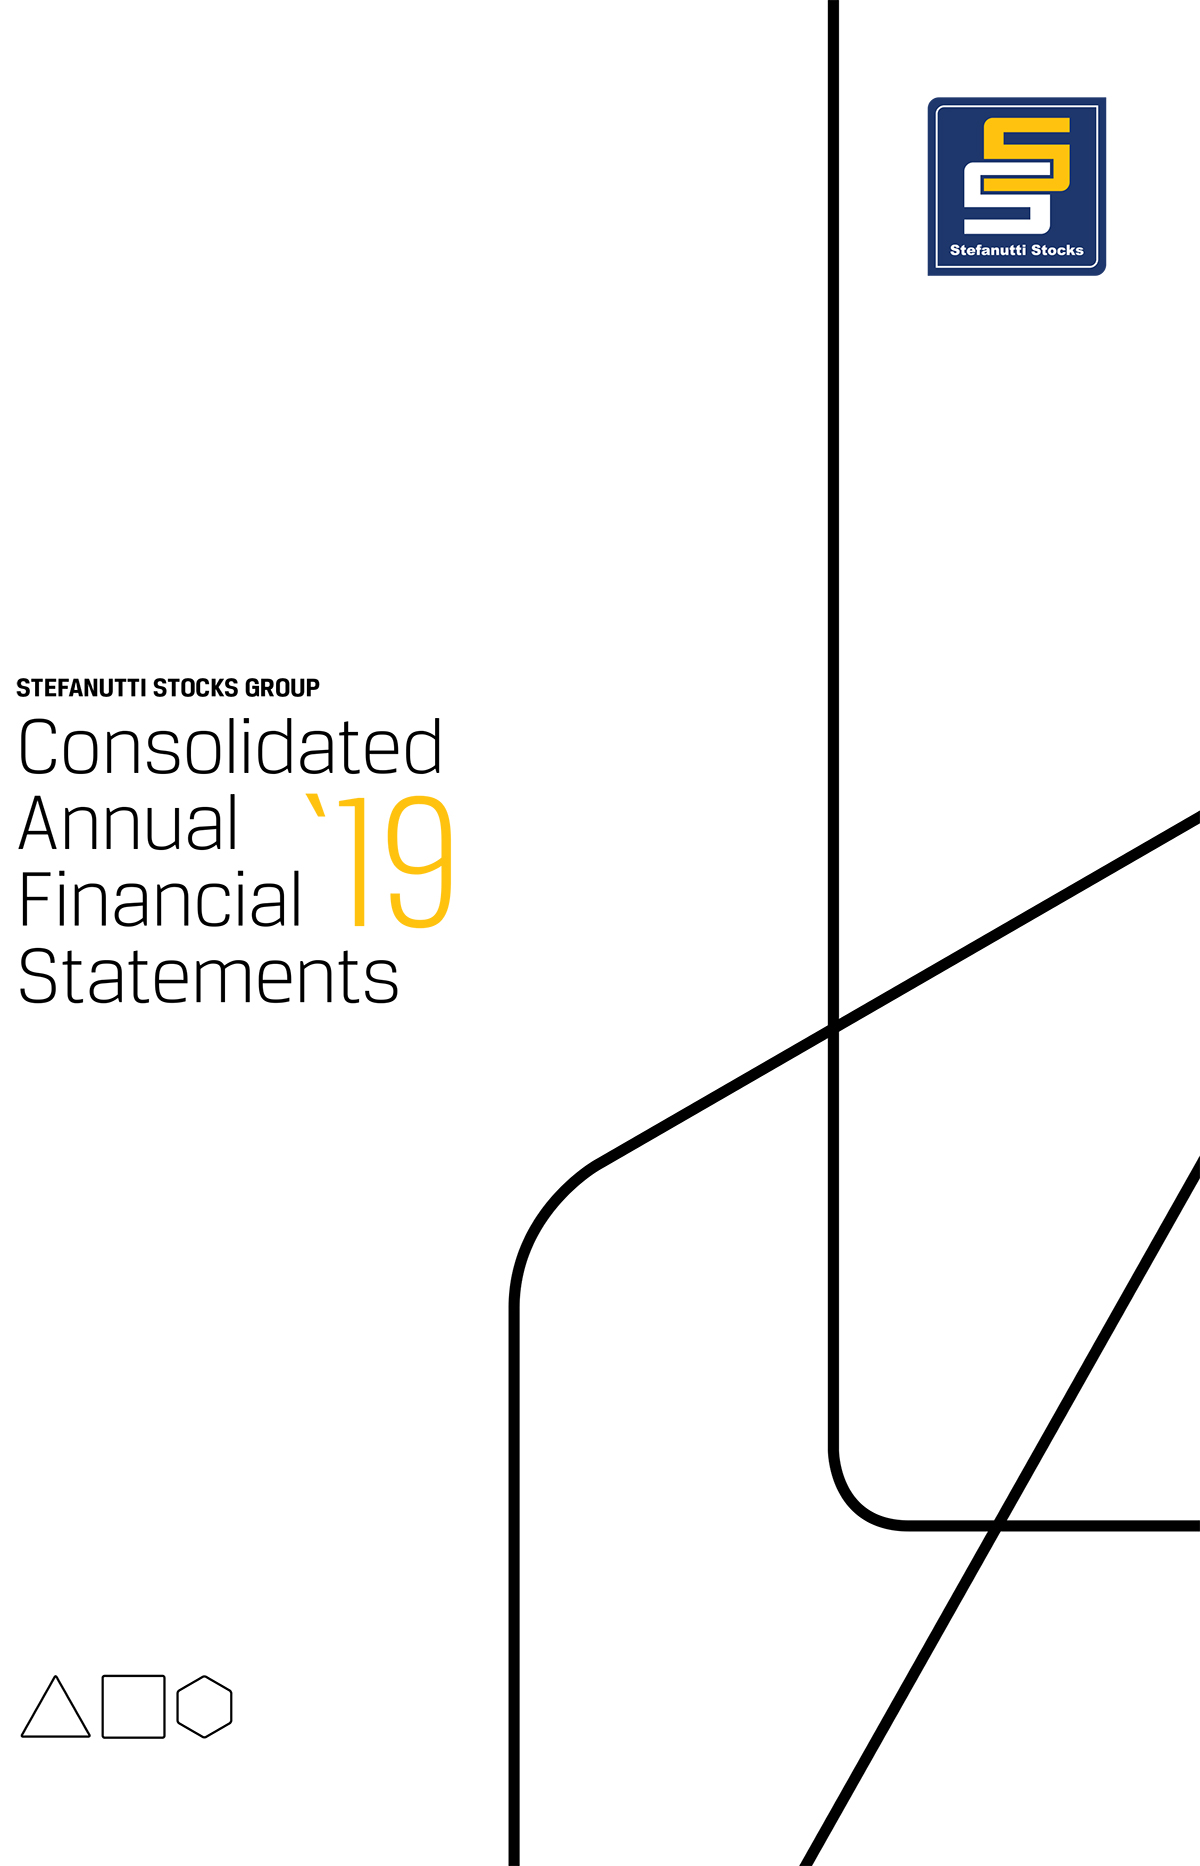 Stefanutti Stocks Group Annual Financial Statements 2019